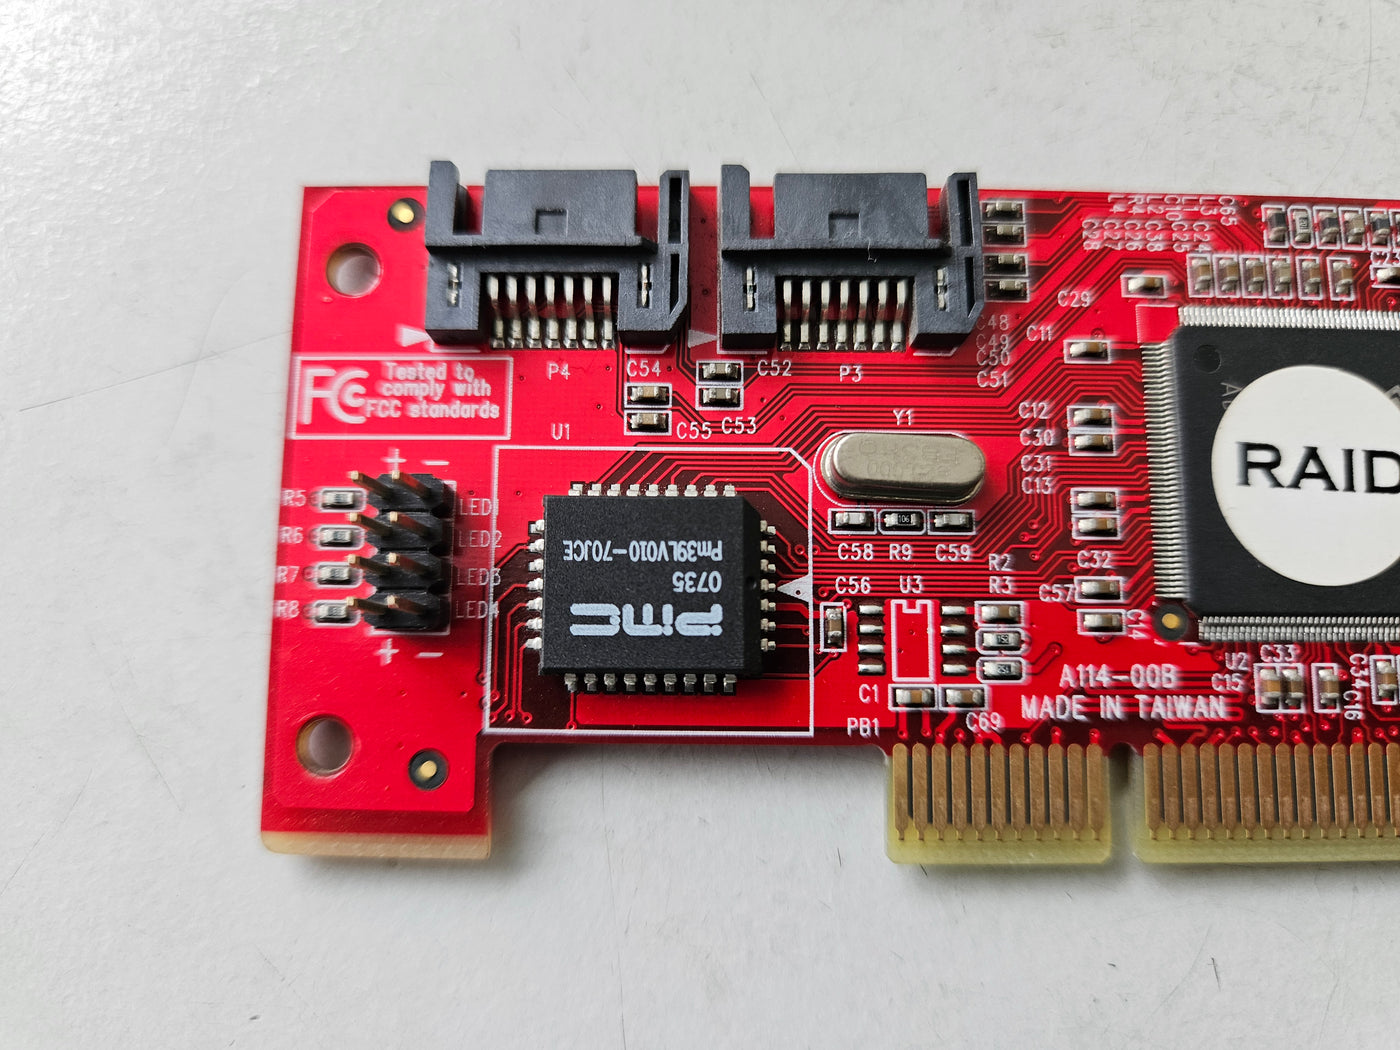 Startech 4-Port PCI SATA RAID Controller Card ( A114-00B ) USED